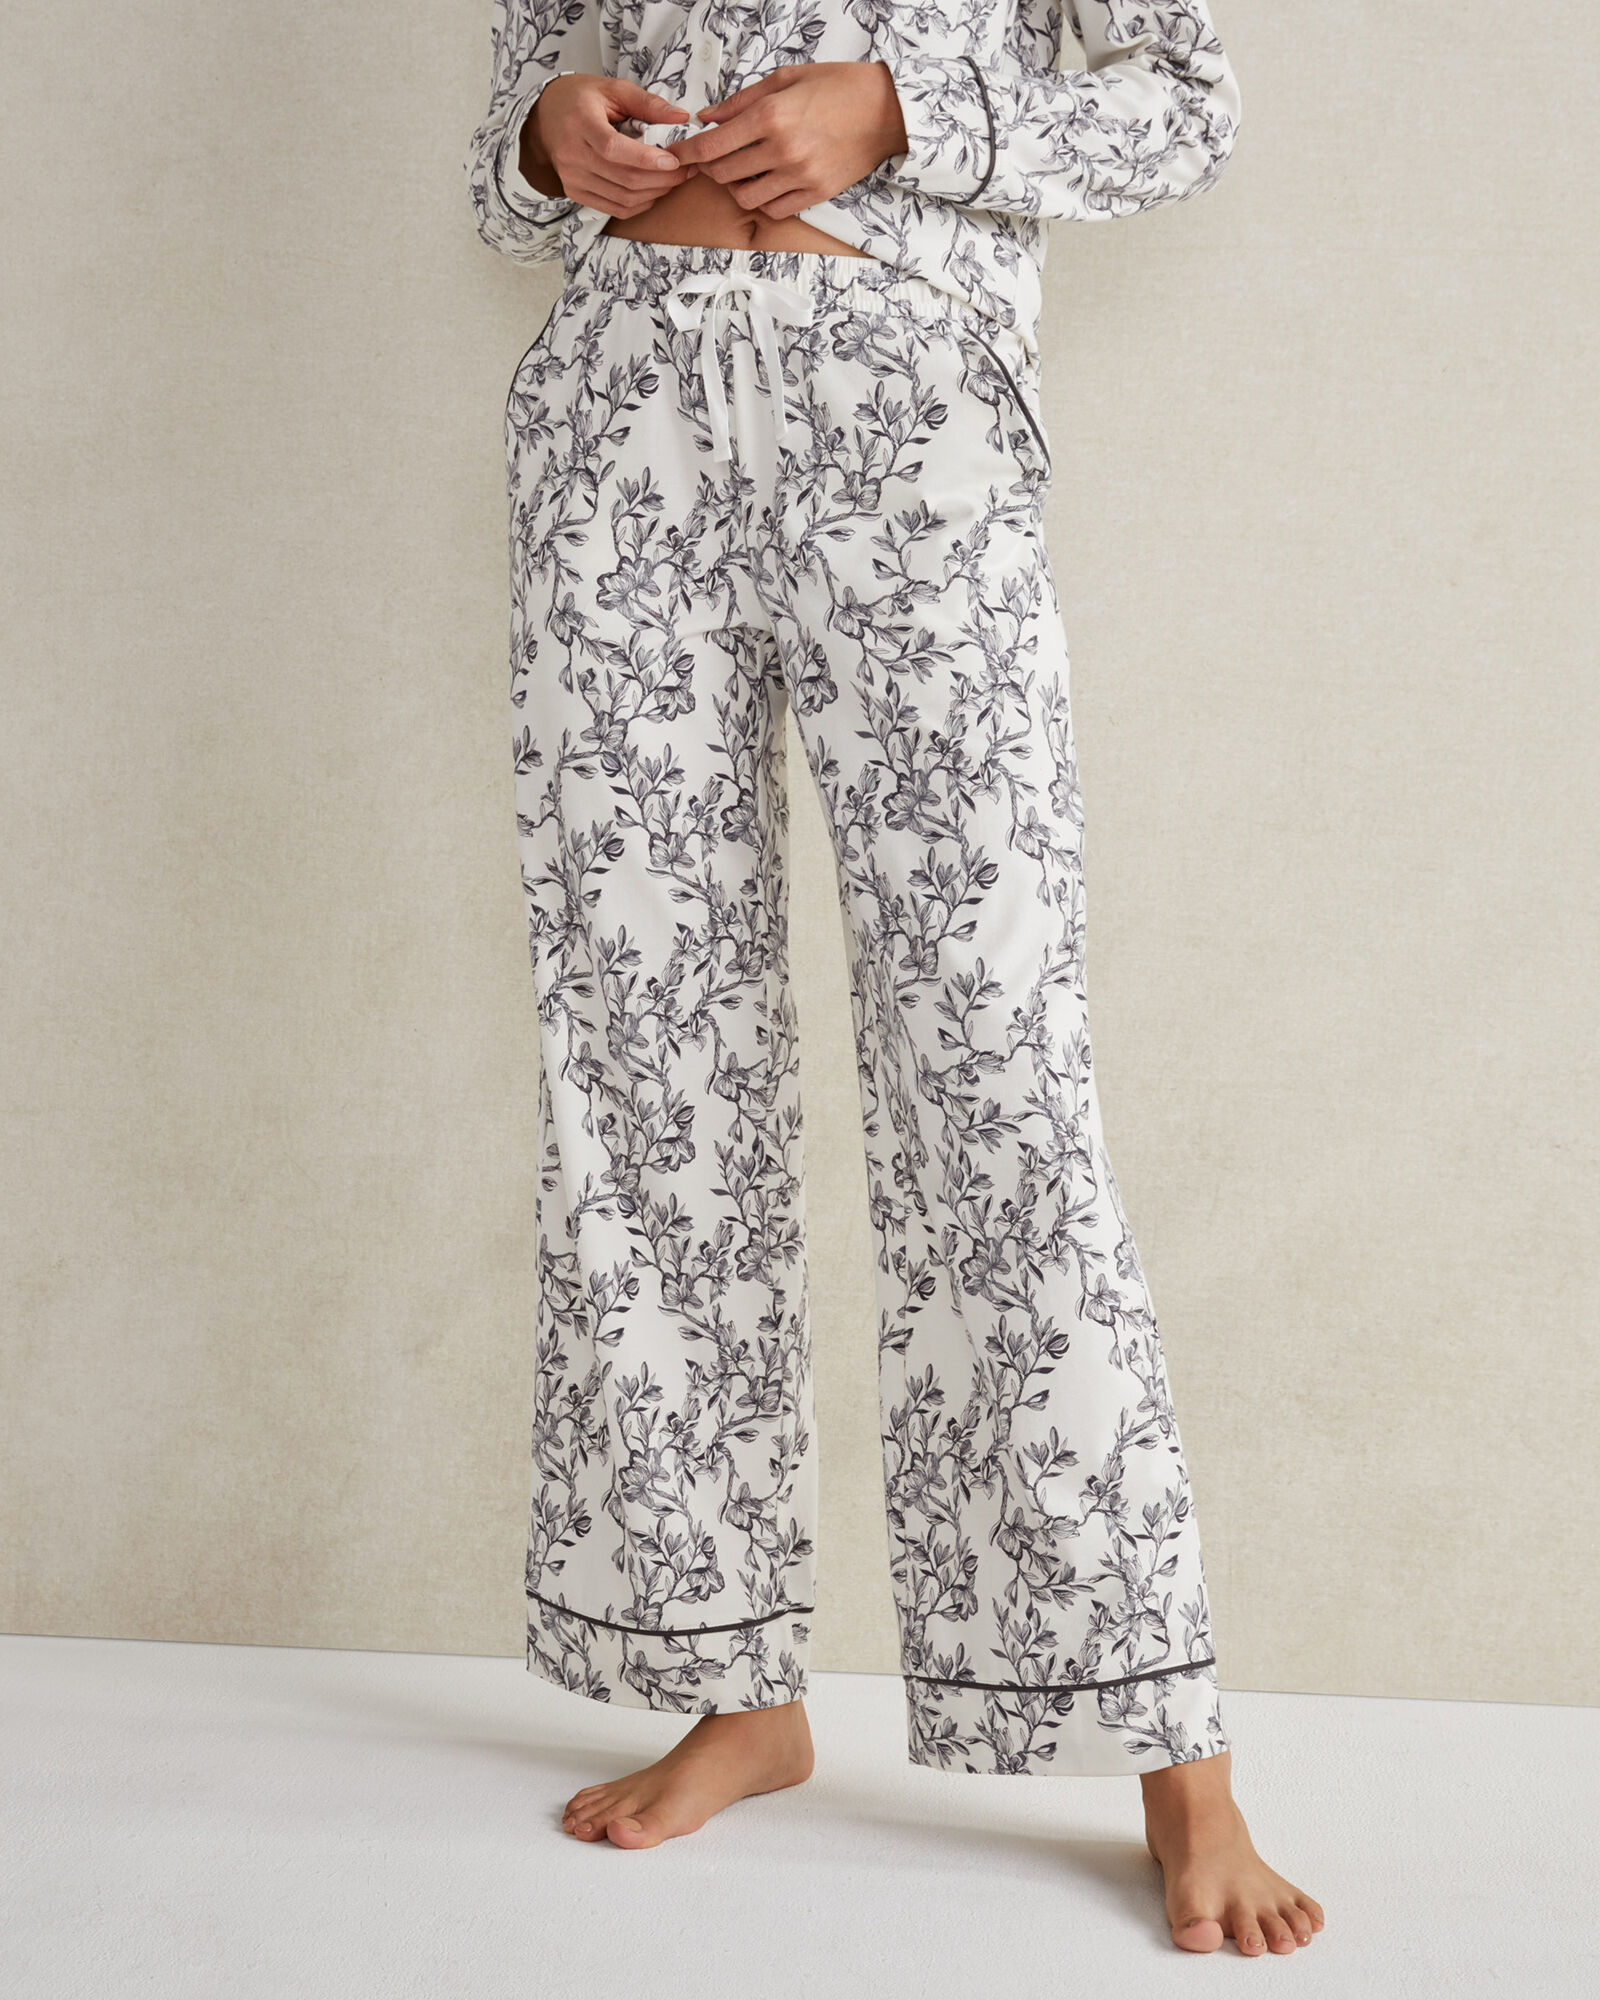 J. Jill Home Pajama Pants for Women